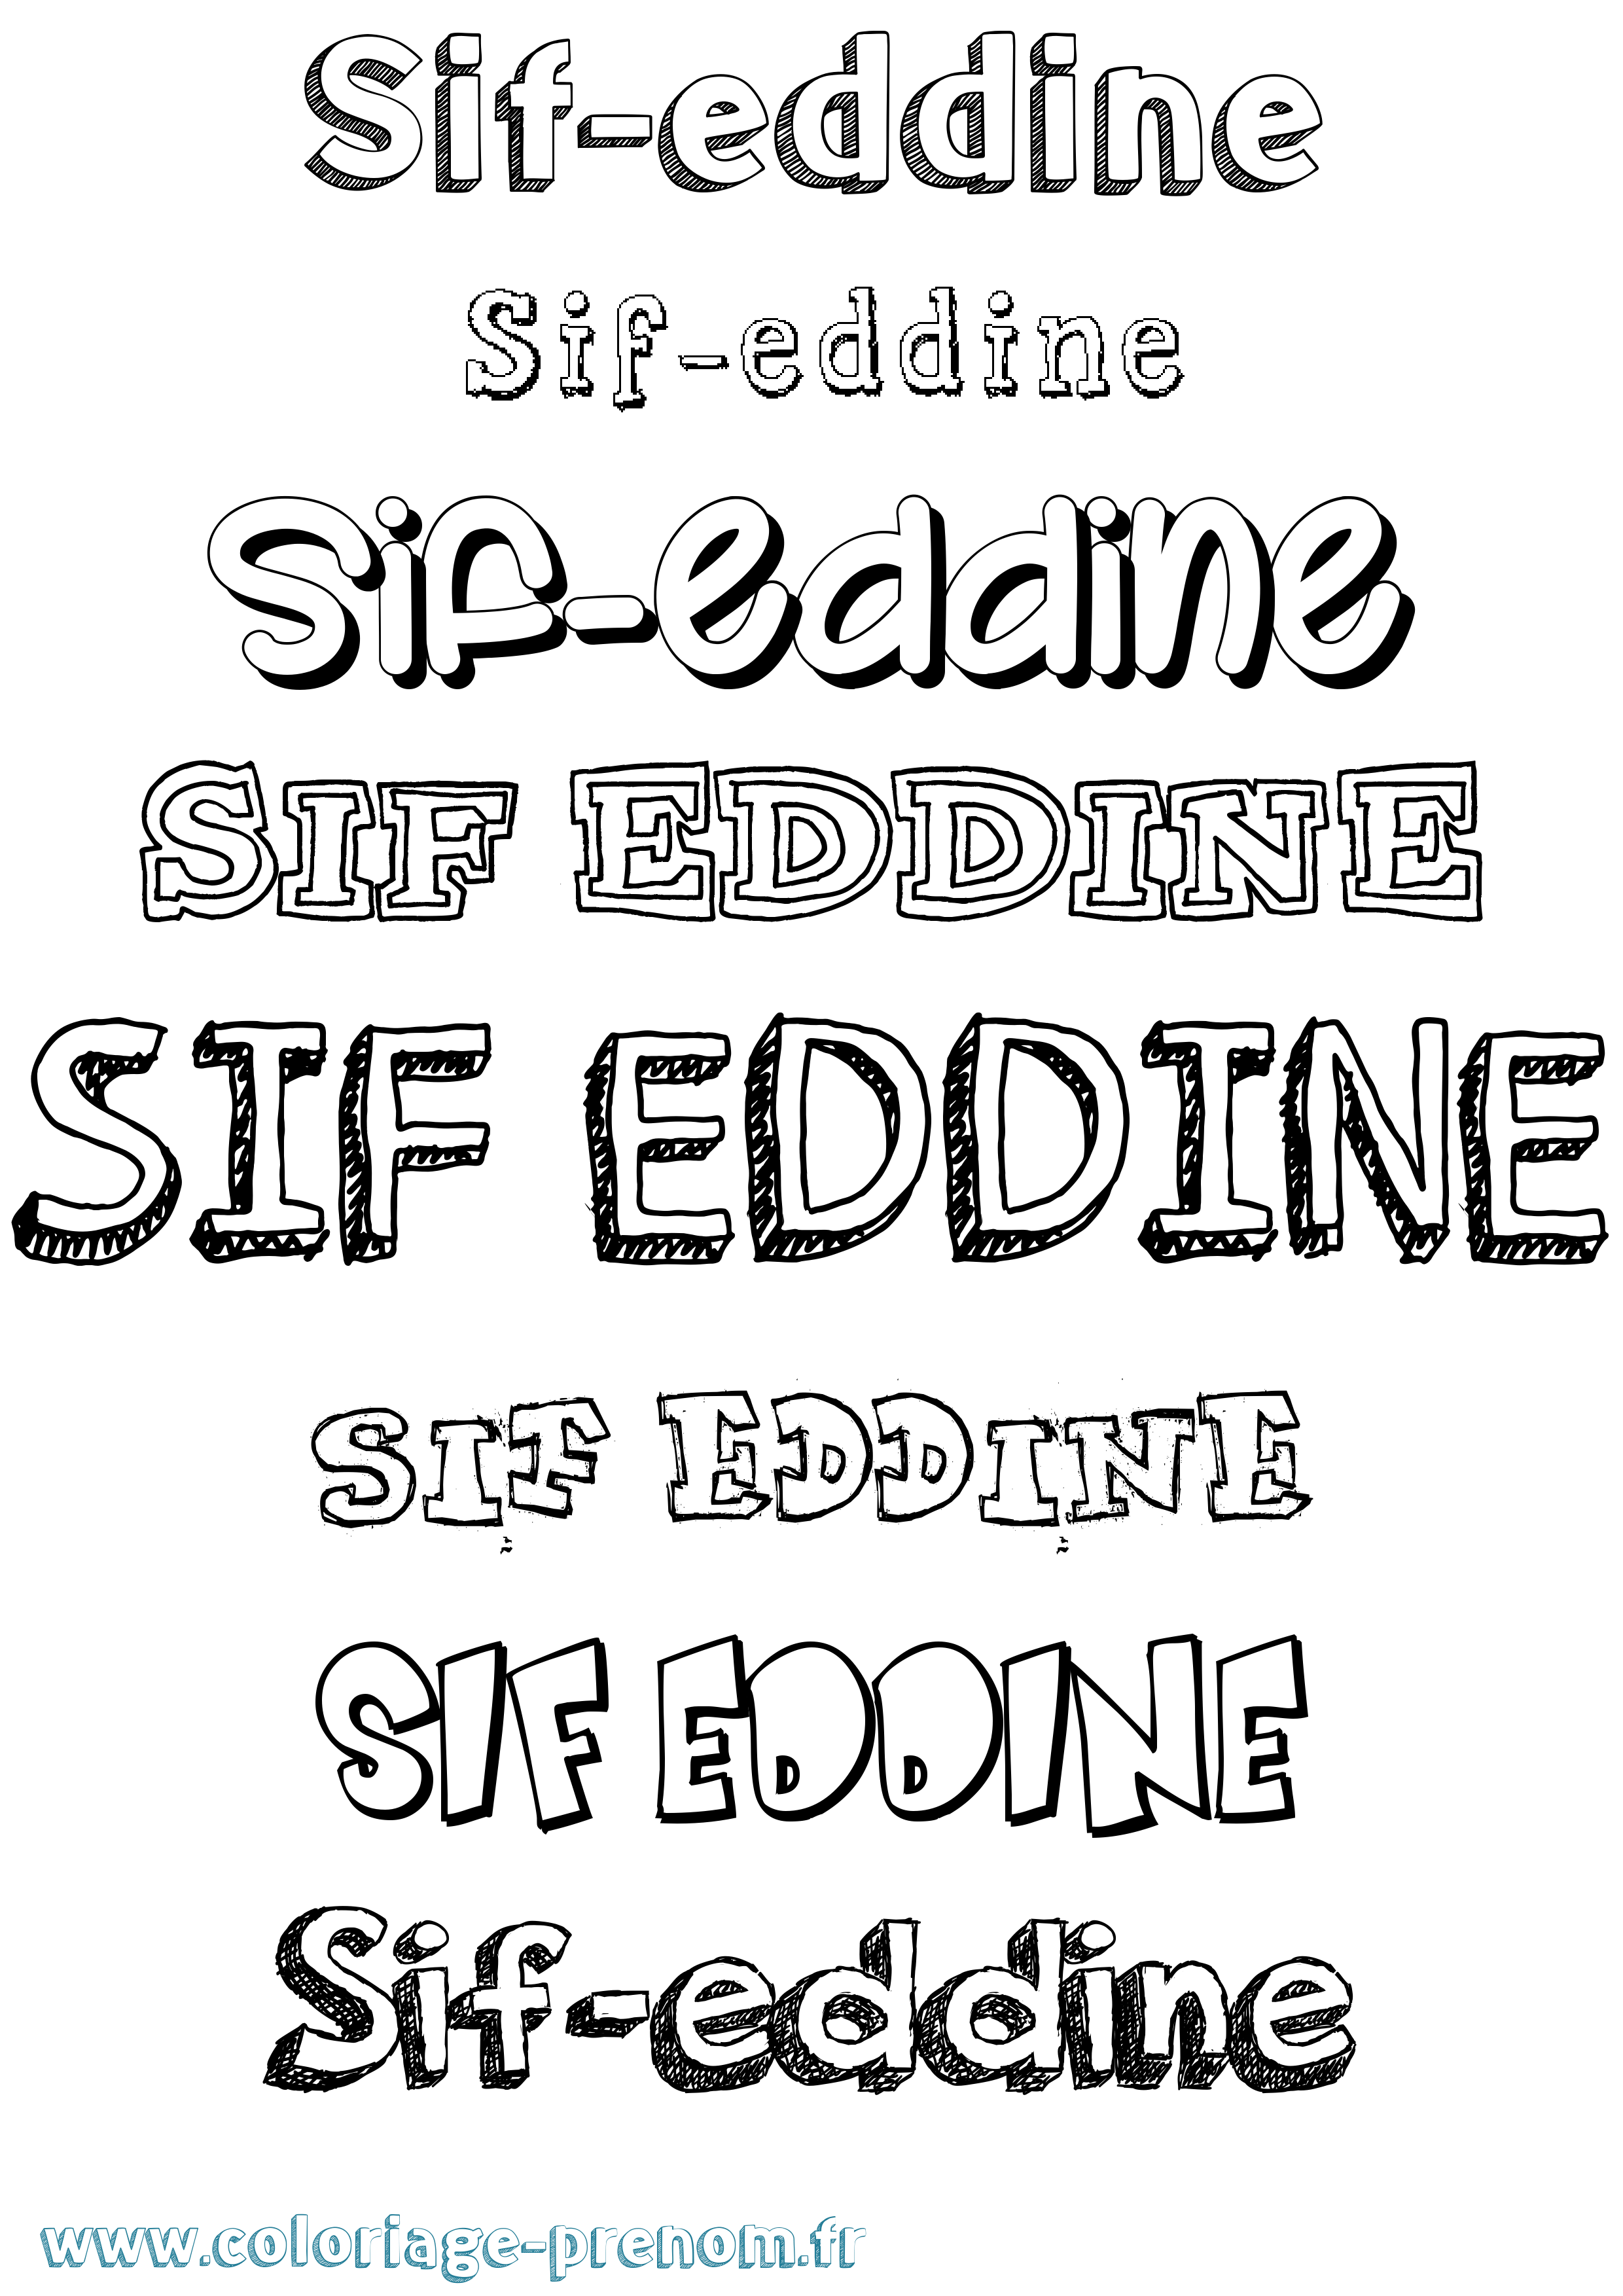 Coloriage prénom Sif-Eddine Dessiné